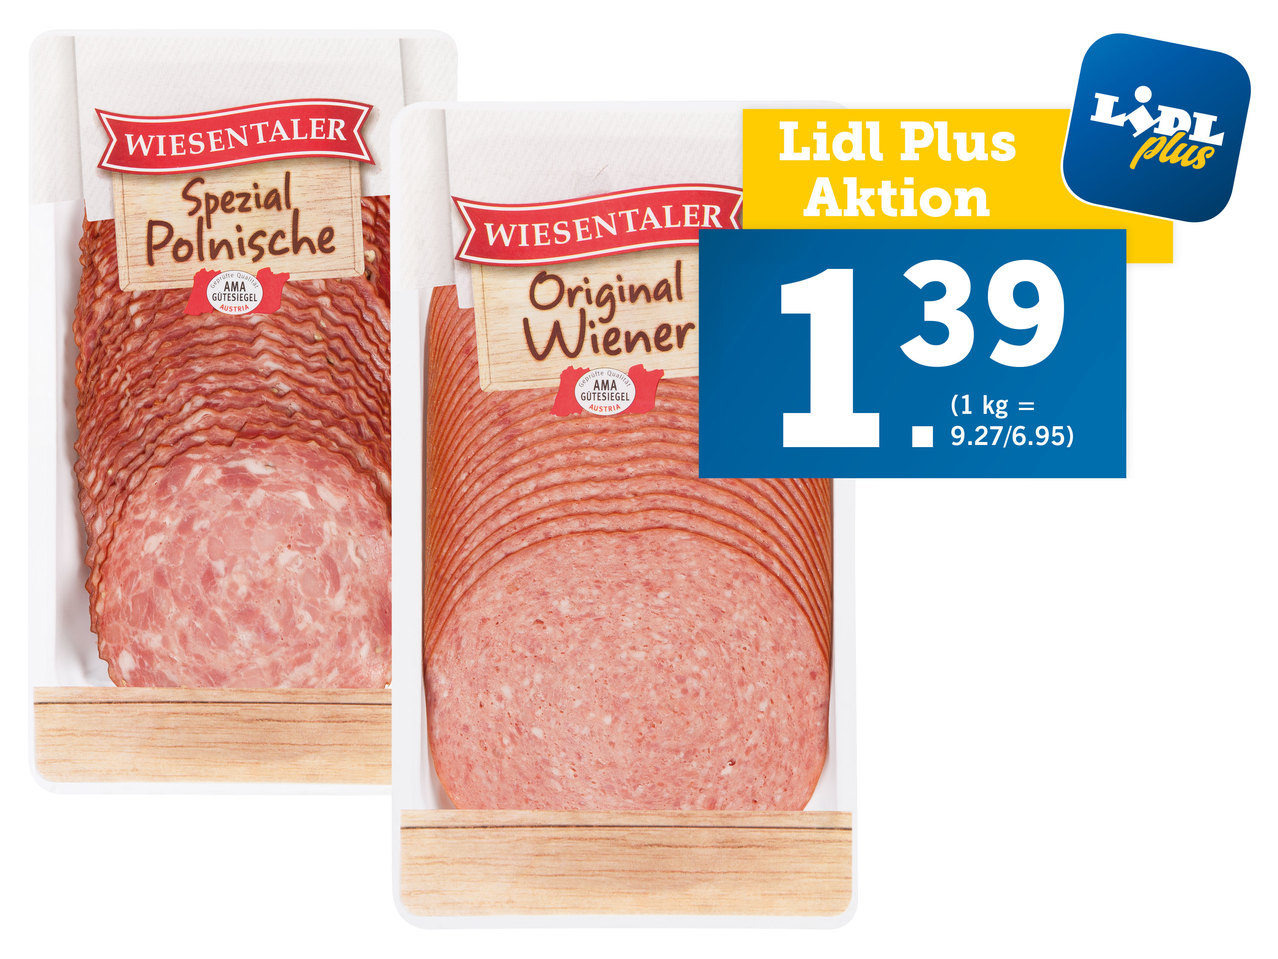 WIESENTALER Original Wiener/Spezial Polnische